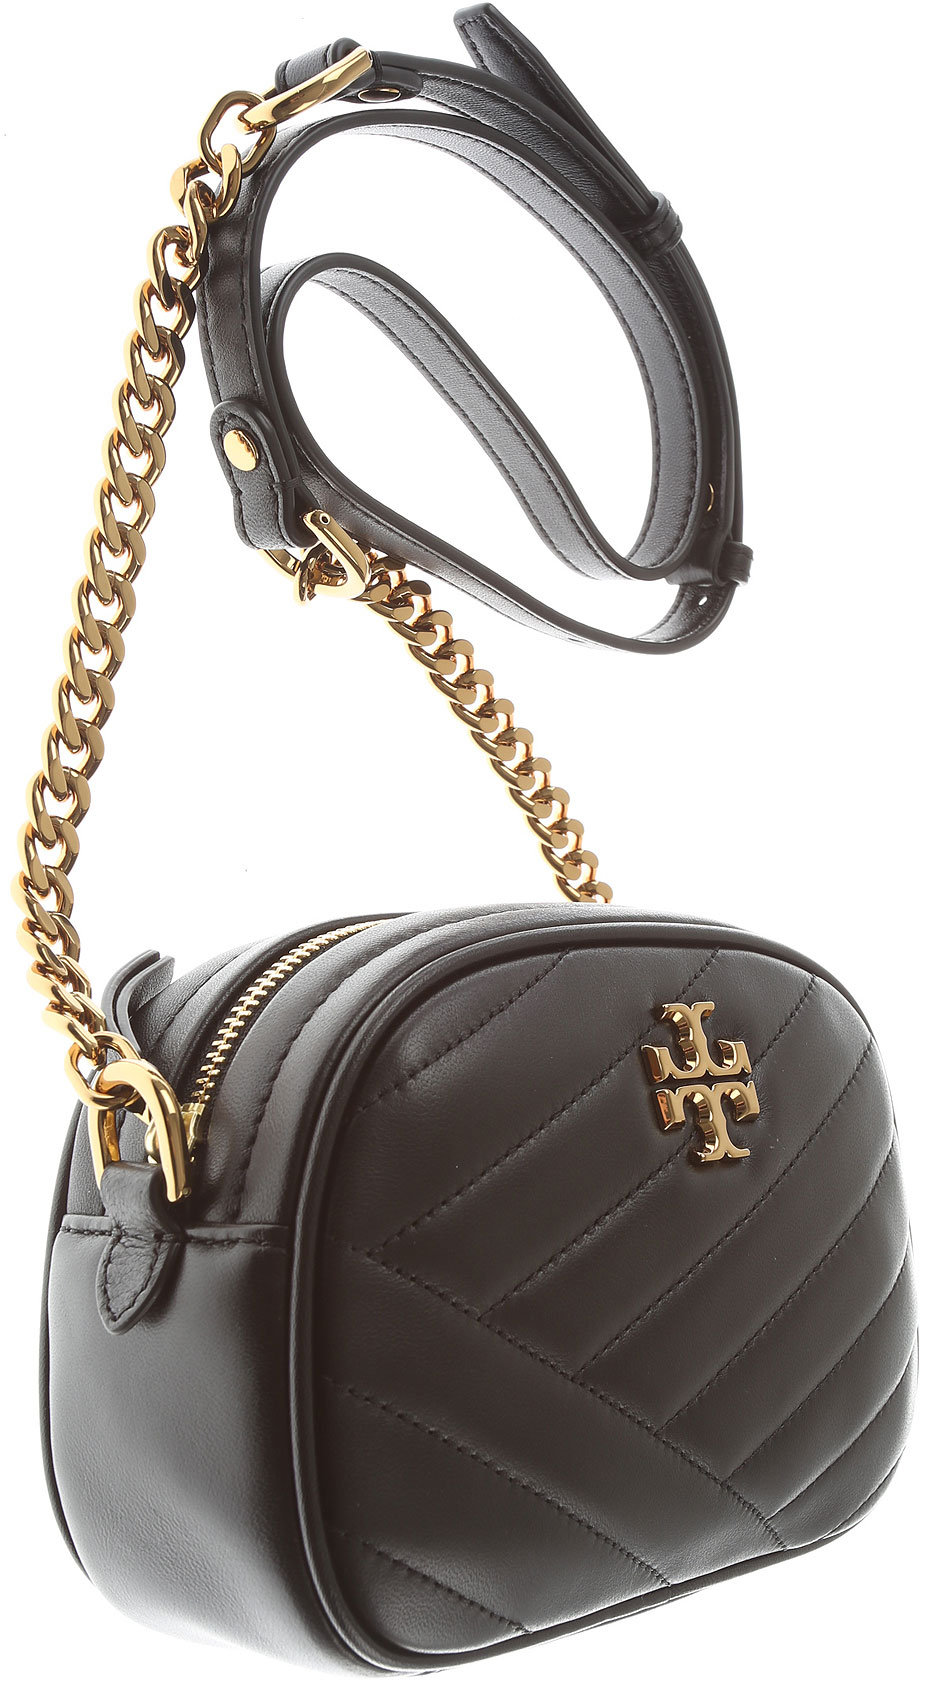 Handbags Tory Burch, Style code: 60227-0619-001